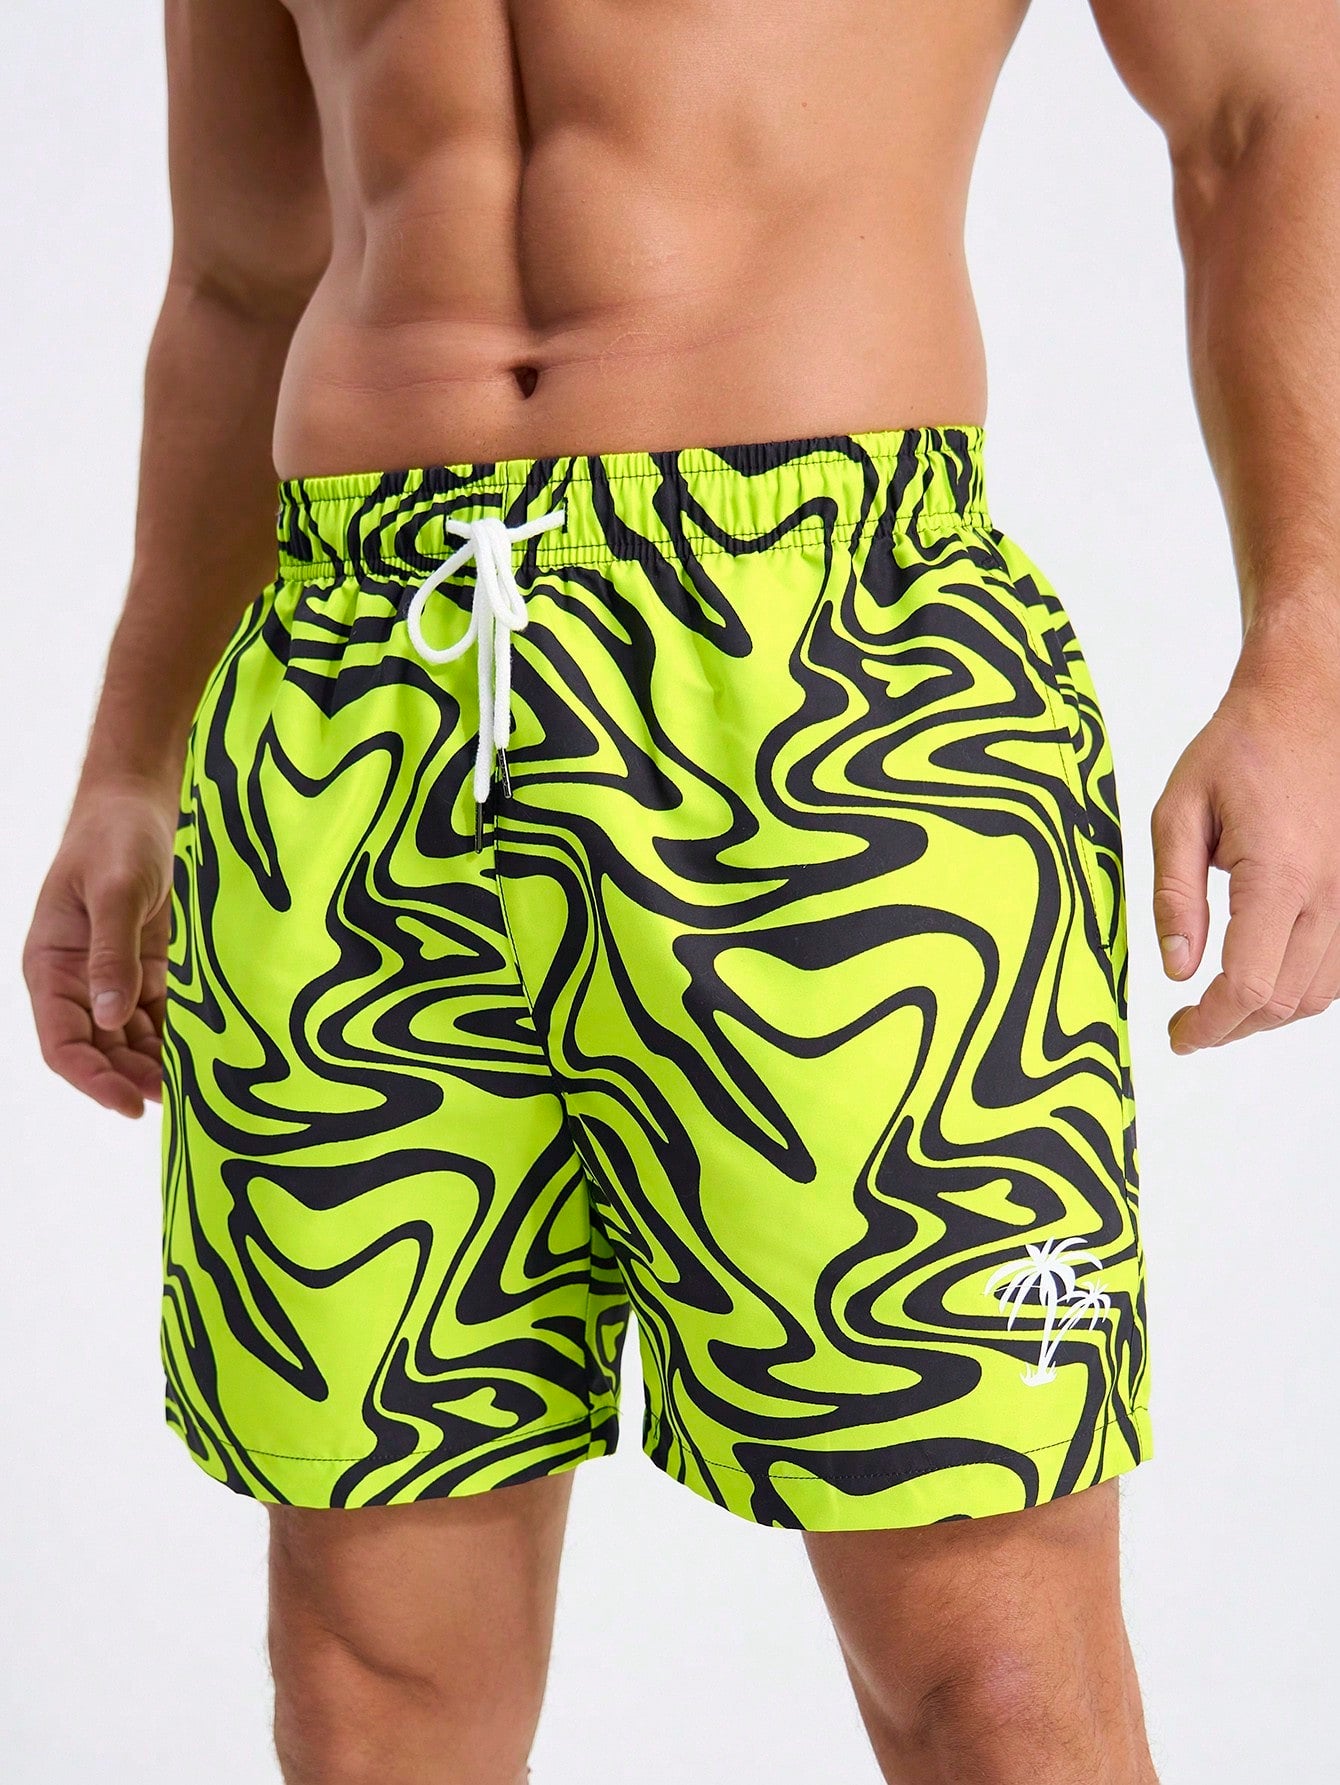 Men's Drawstring Beach Shorts For Summer Vacation